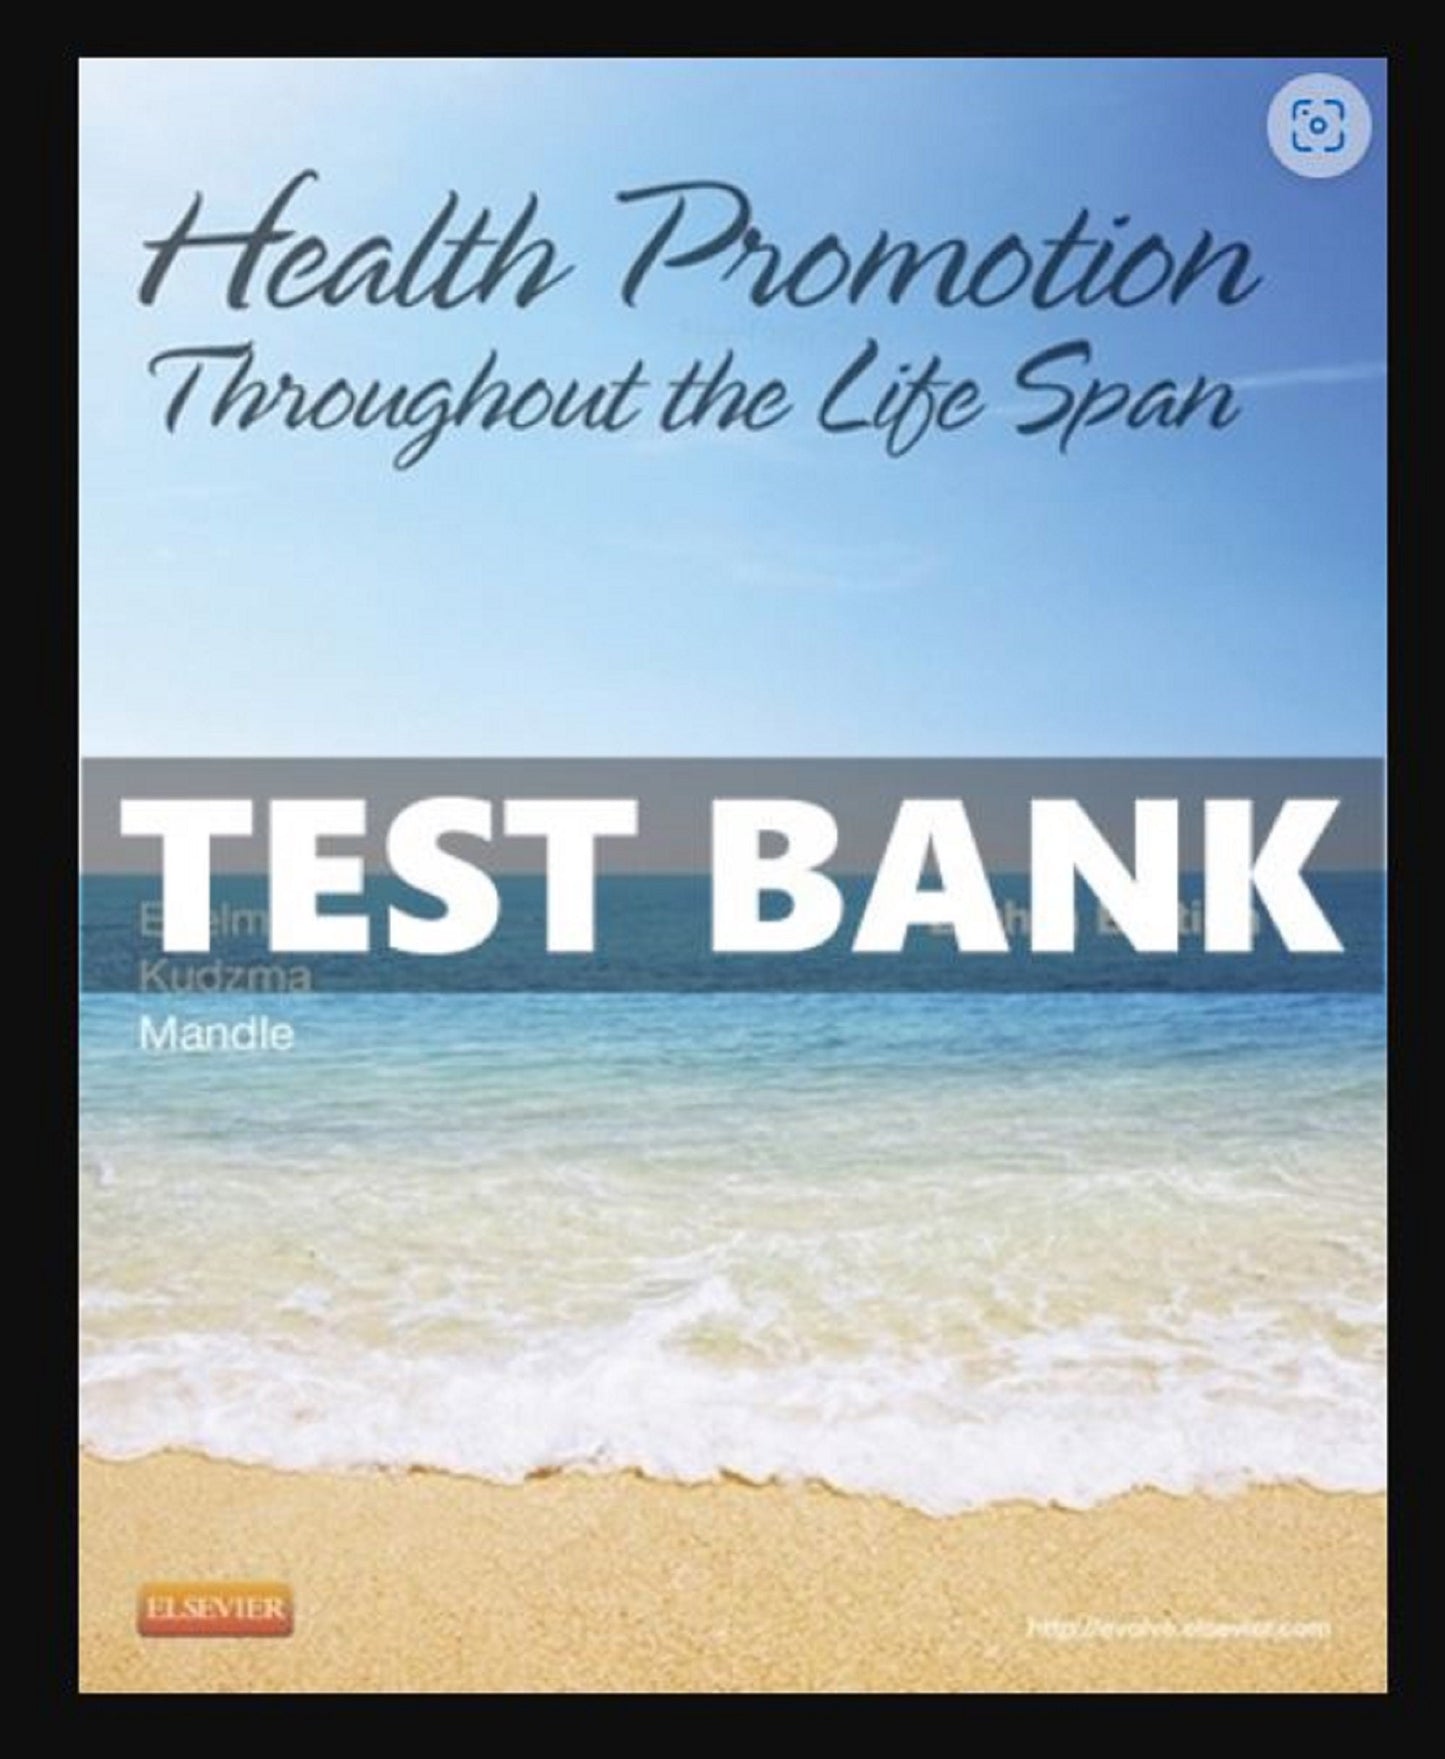 Test Bank Edelman Health Promotion Throughout the Life Span 8th Edition Nursing